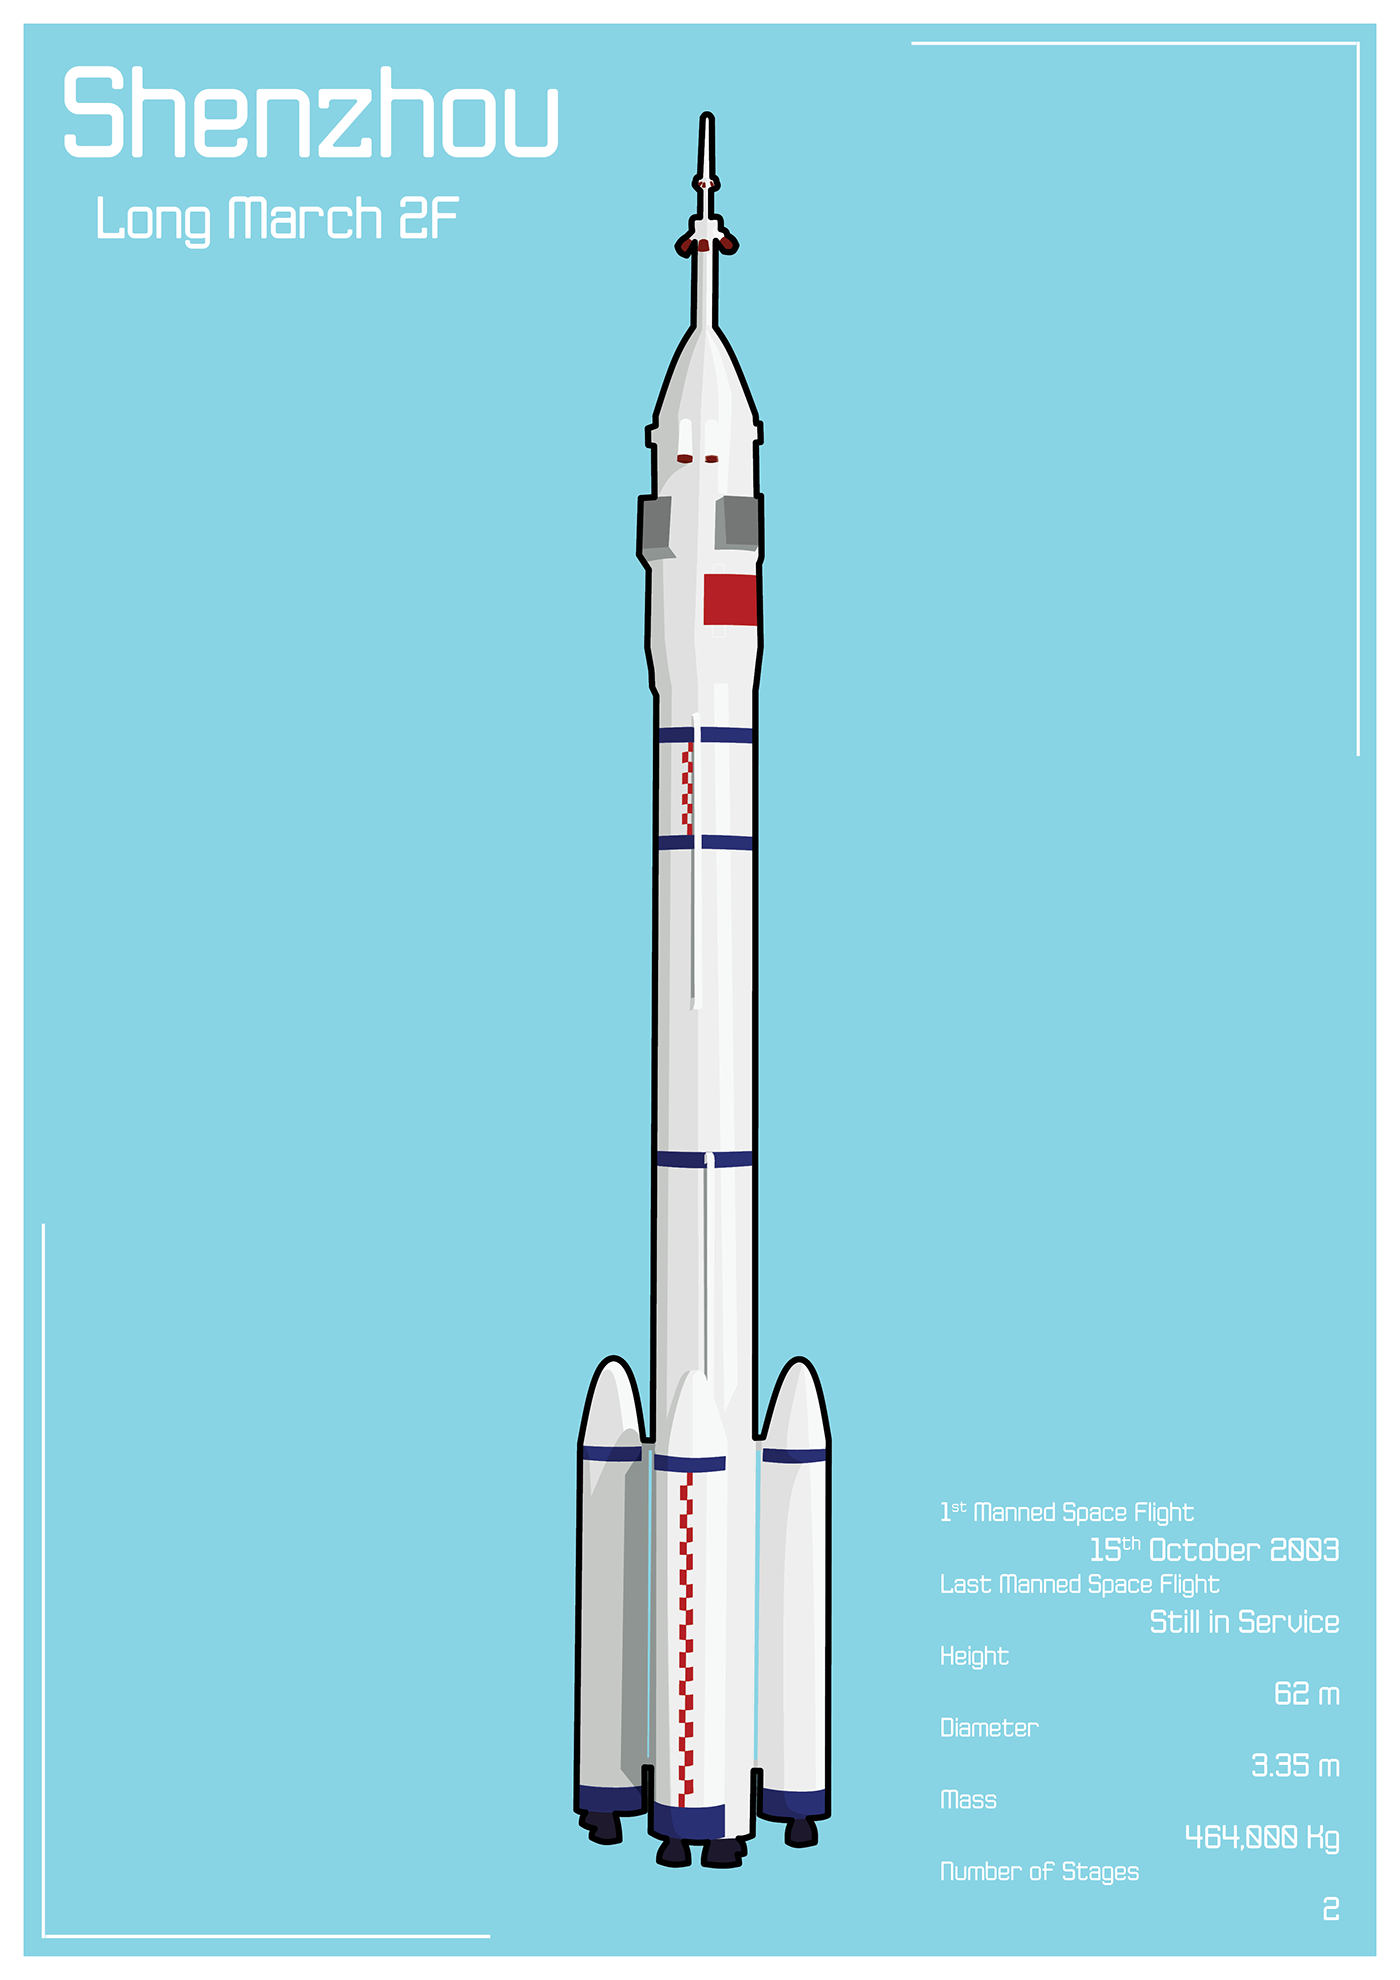 #space Apollo Gemini mercury Soyuz vostok #SpaceX #NASA spaceshipone Spaceshuttle